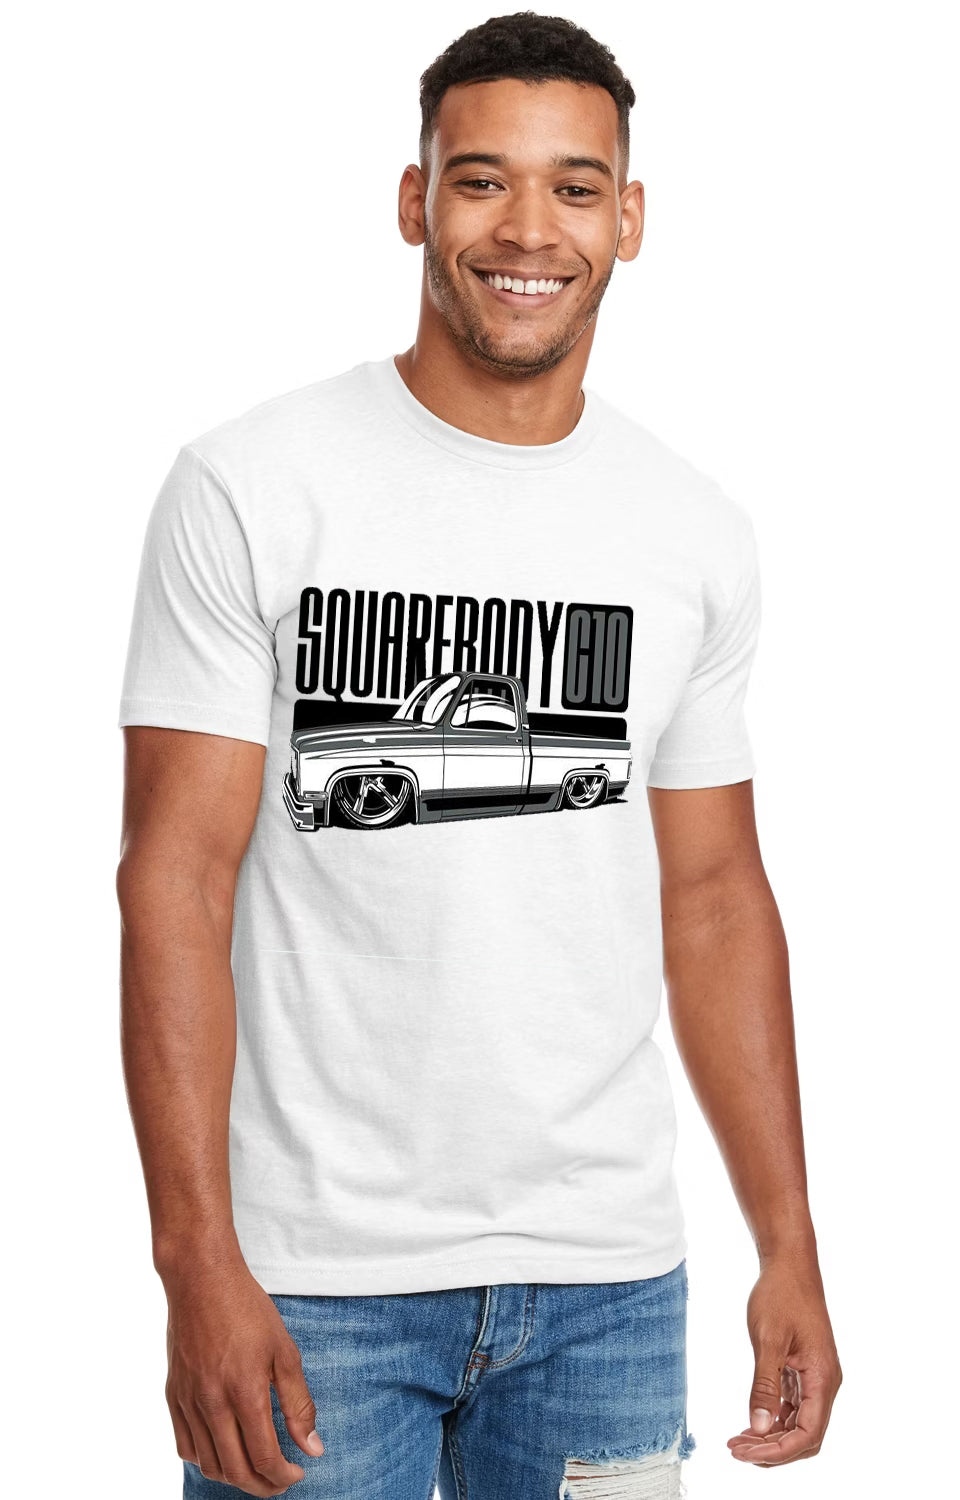 Squarebody C10 Shirt